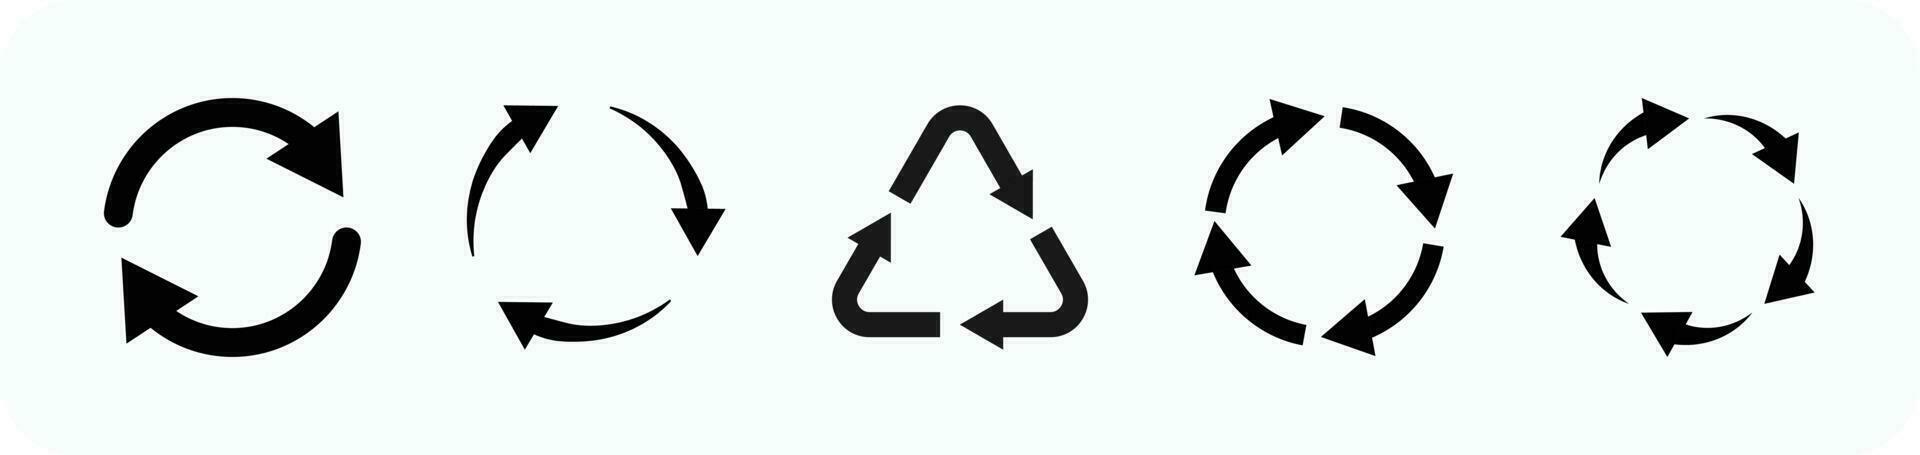 recycle pijl icoon reeks - vector